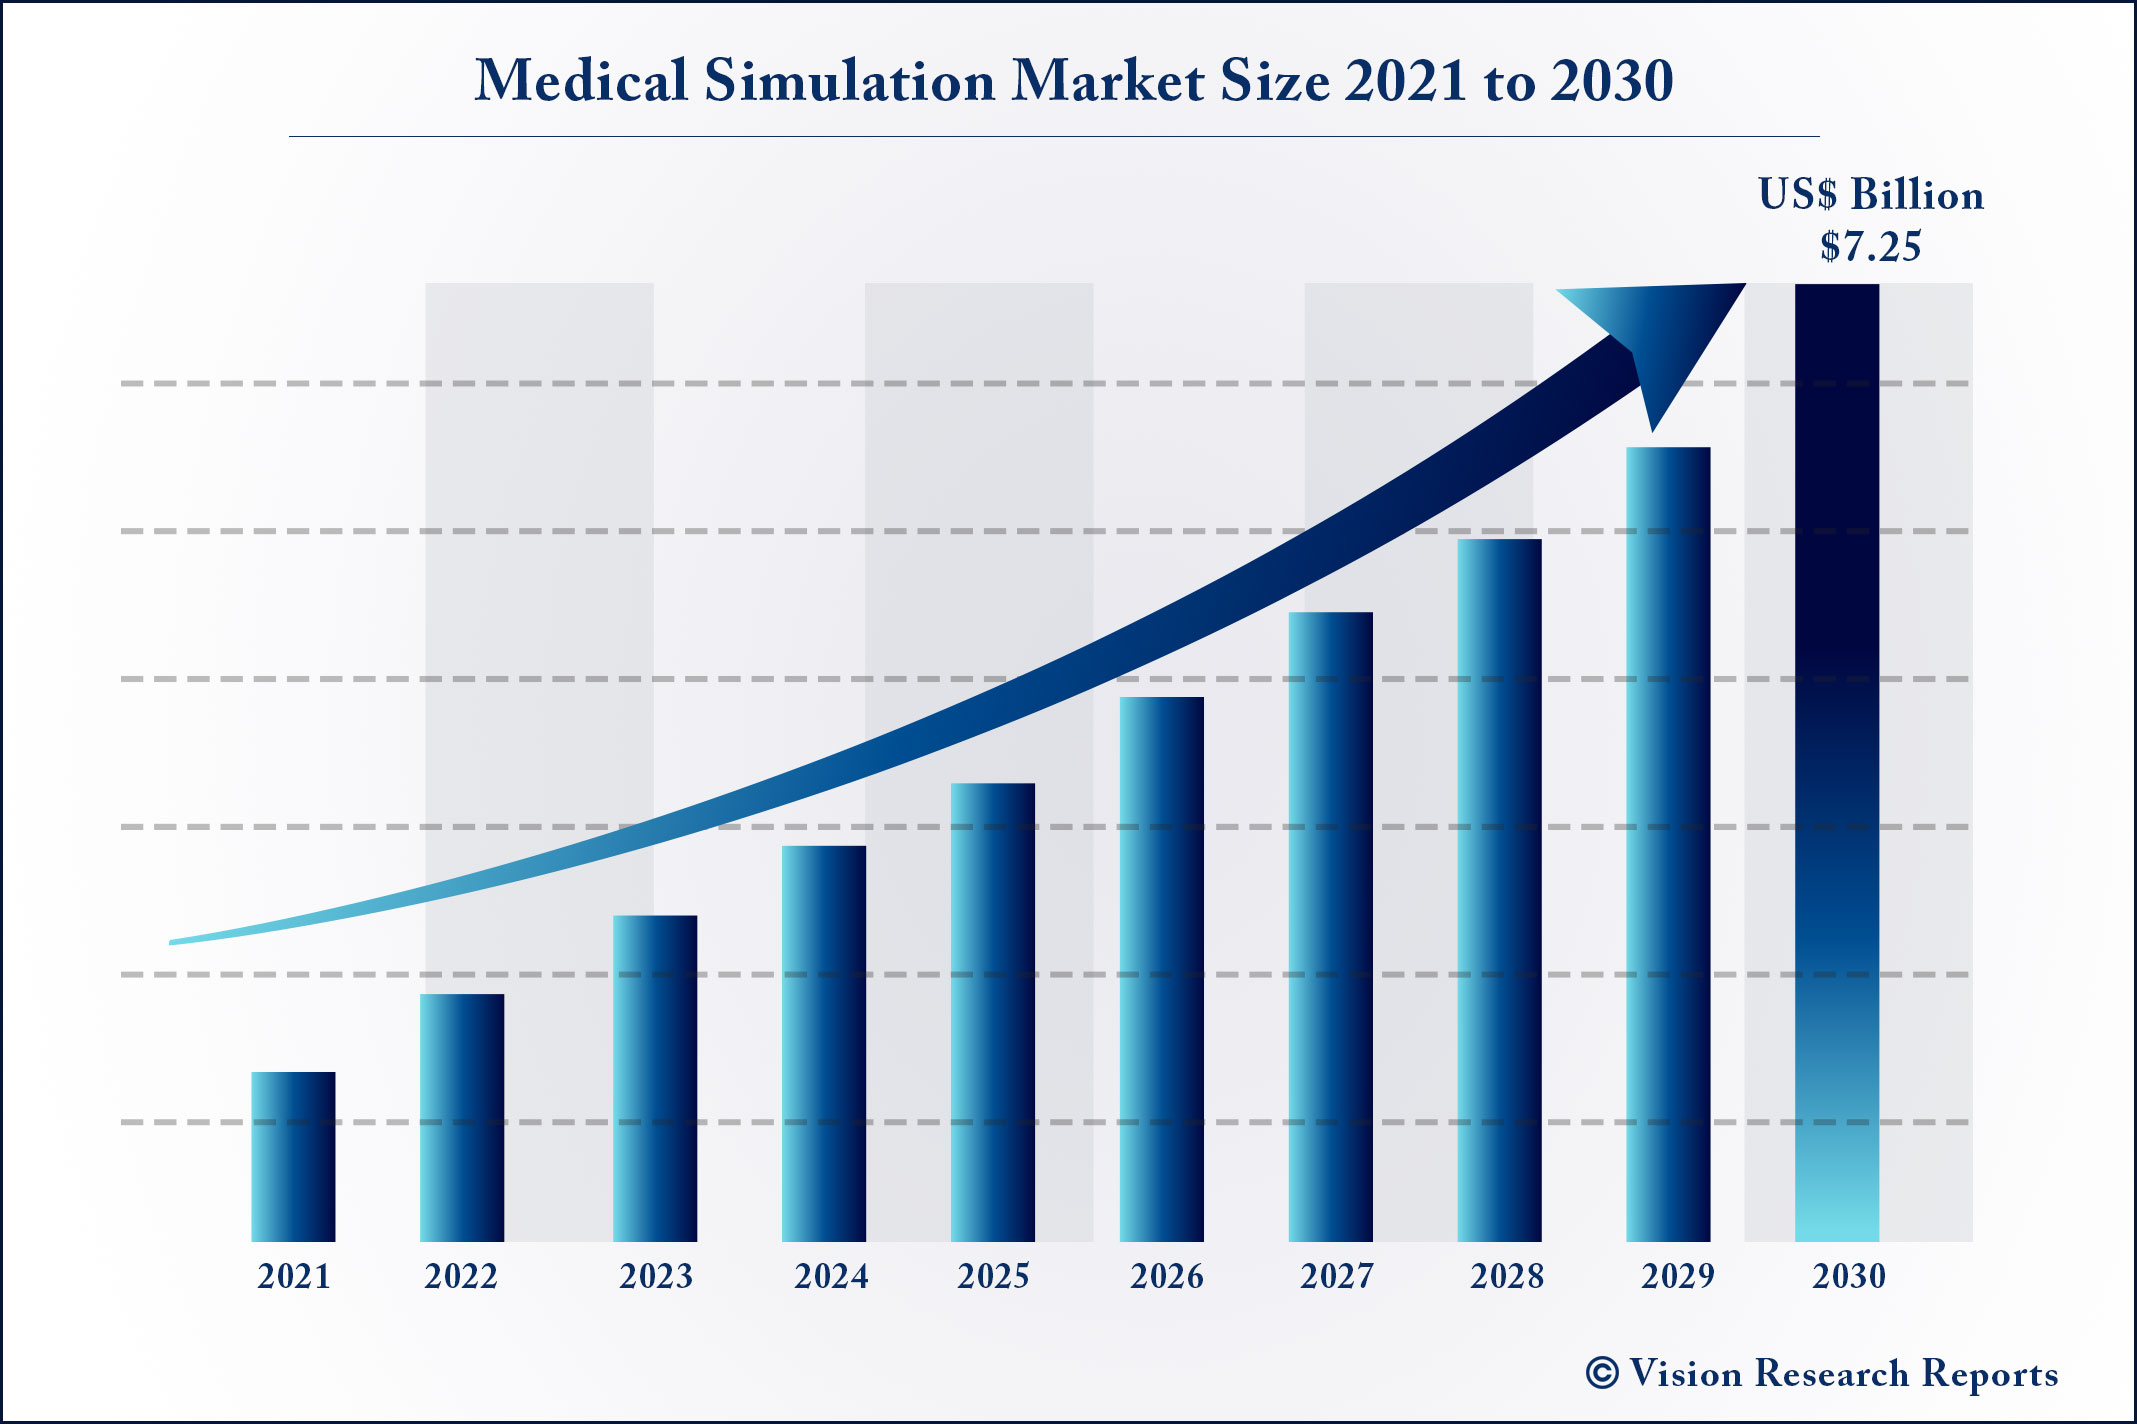 Medical Simulation Market Size 2021 to 2030